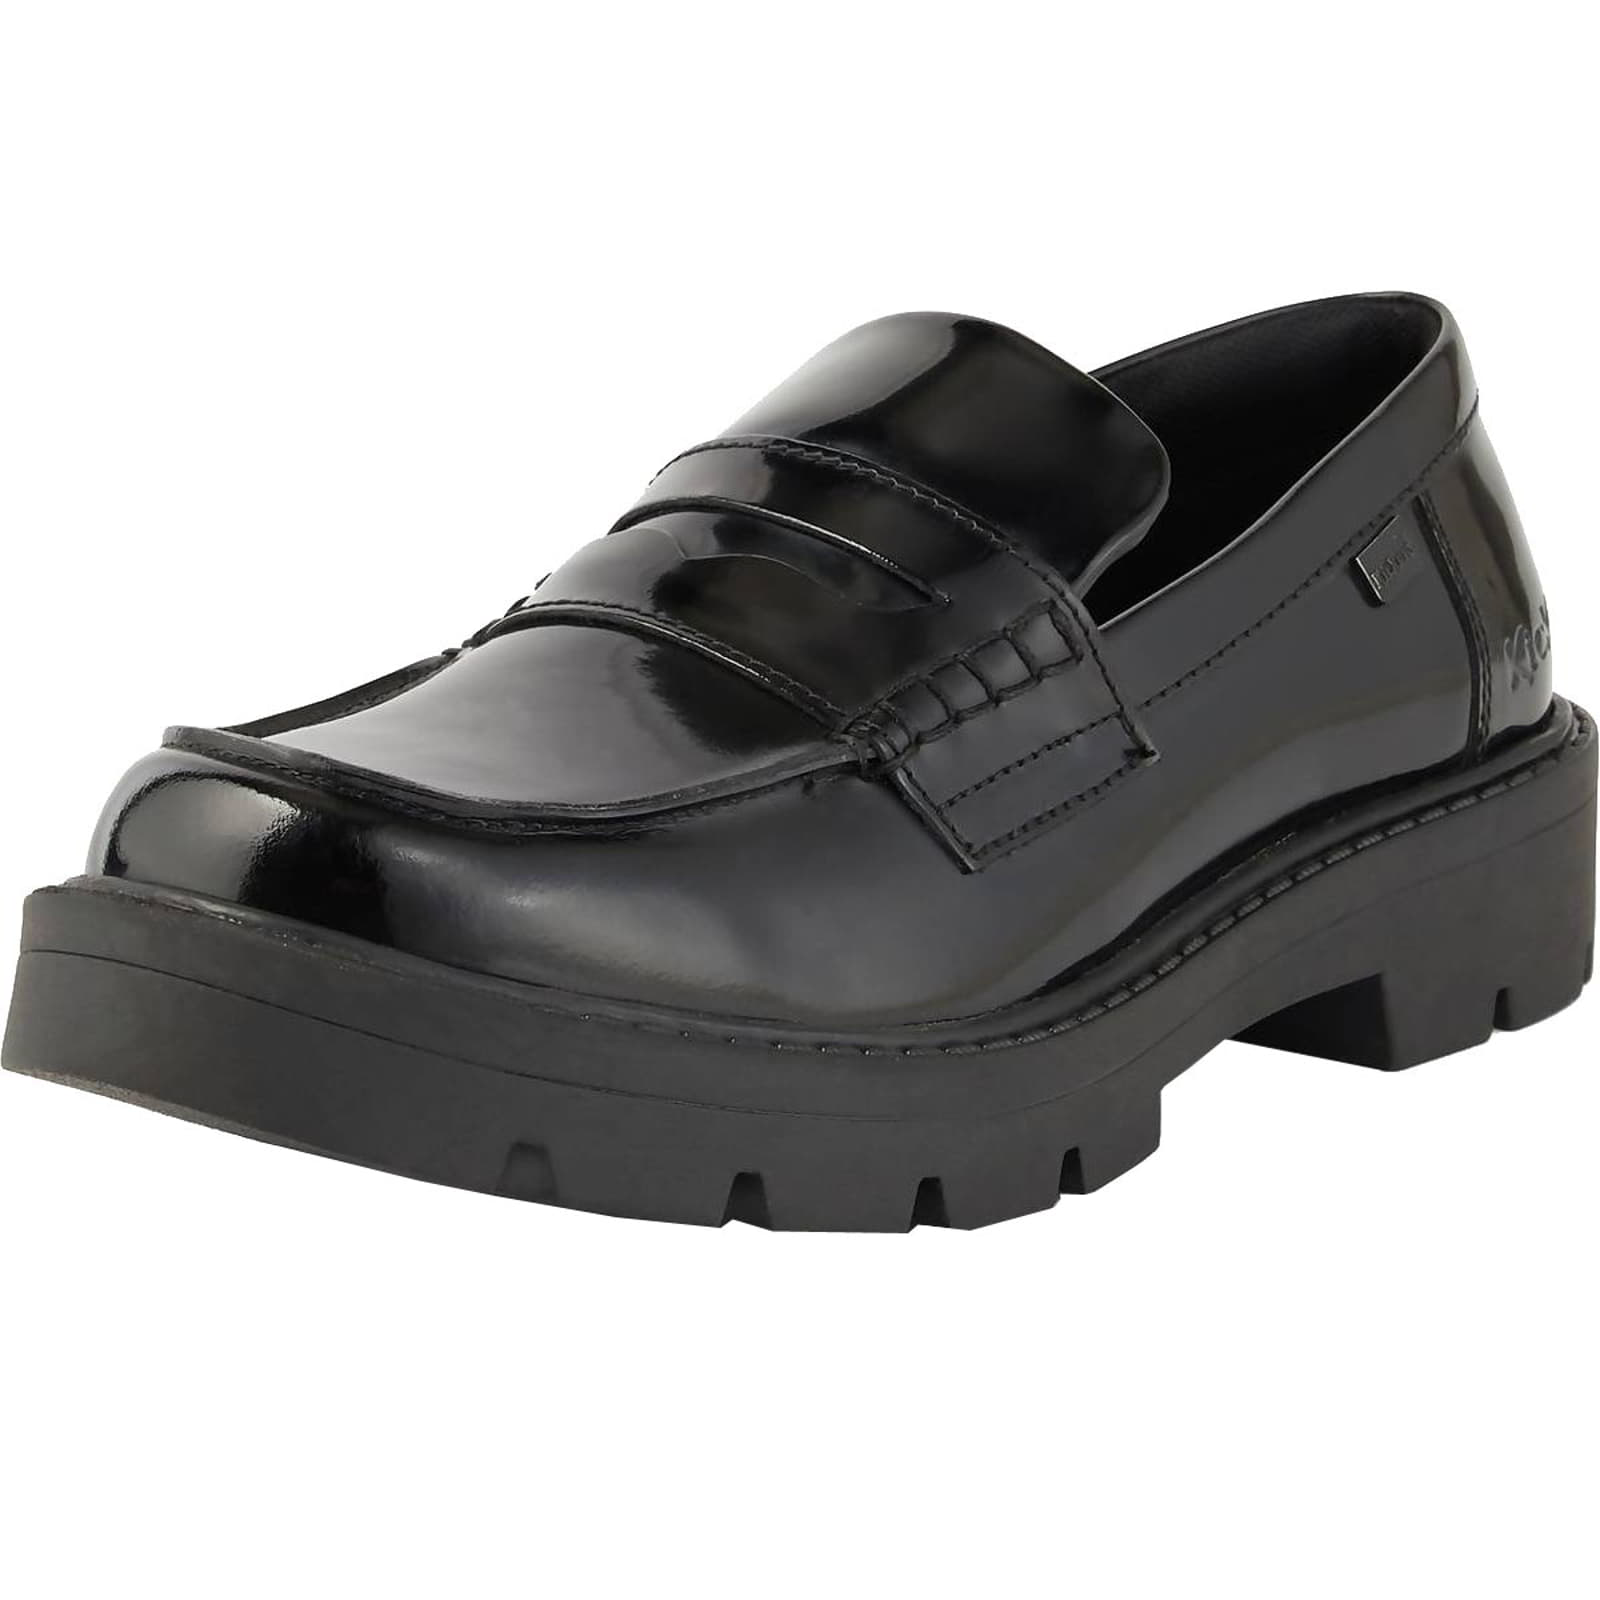 Kickers Women's Kori Loafer Leather Shoes  - UK 8 / EU 42